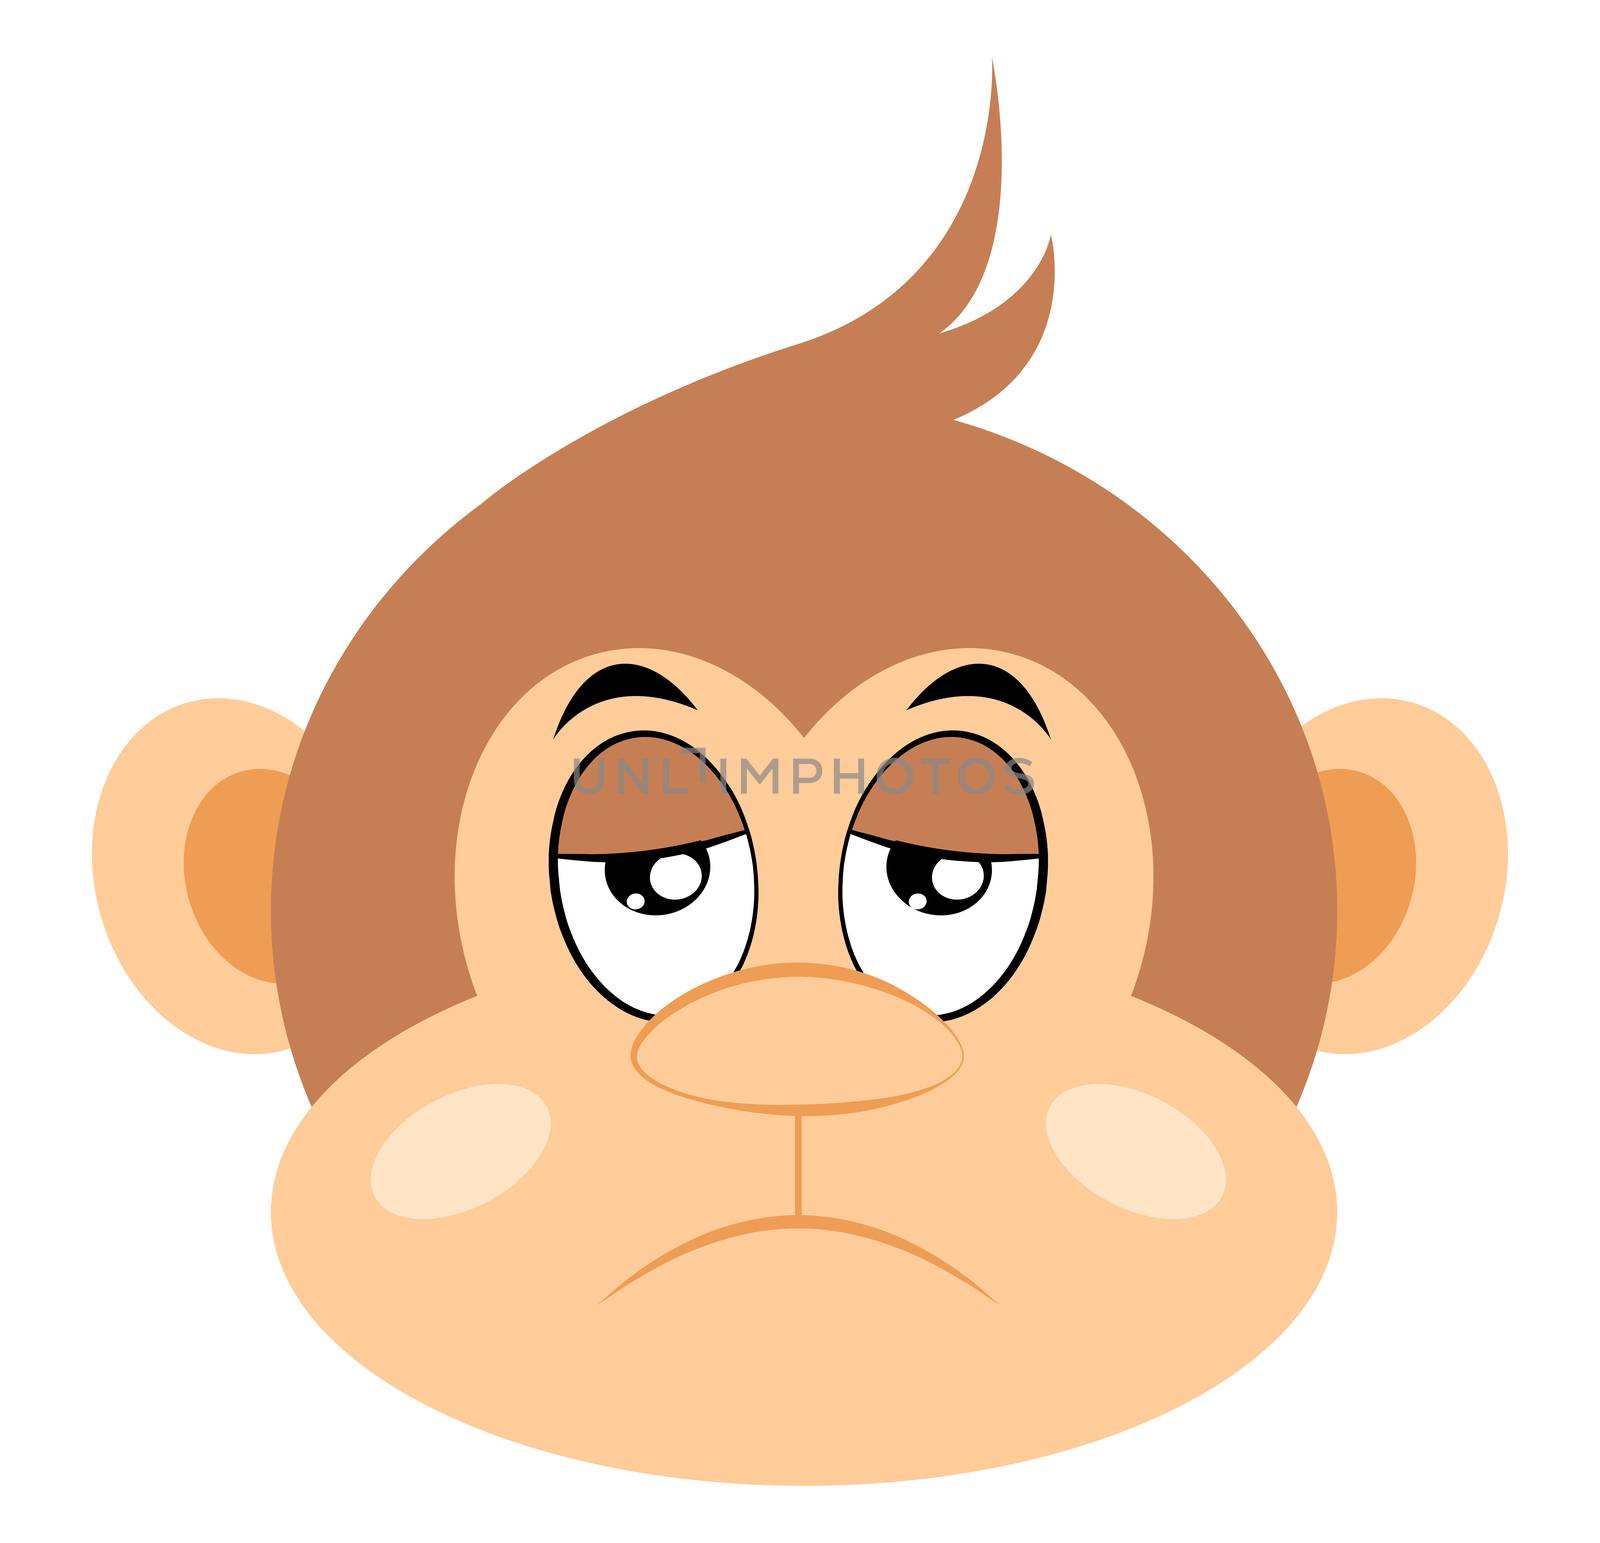 Bored monkey, illustration, vector on white background